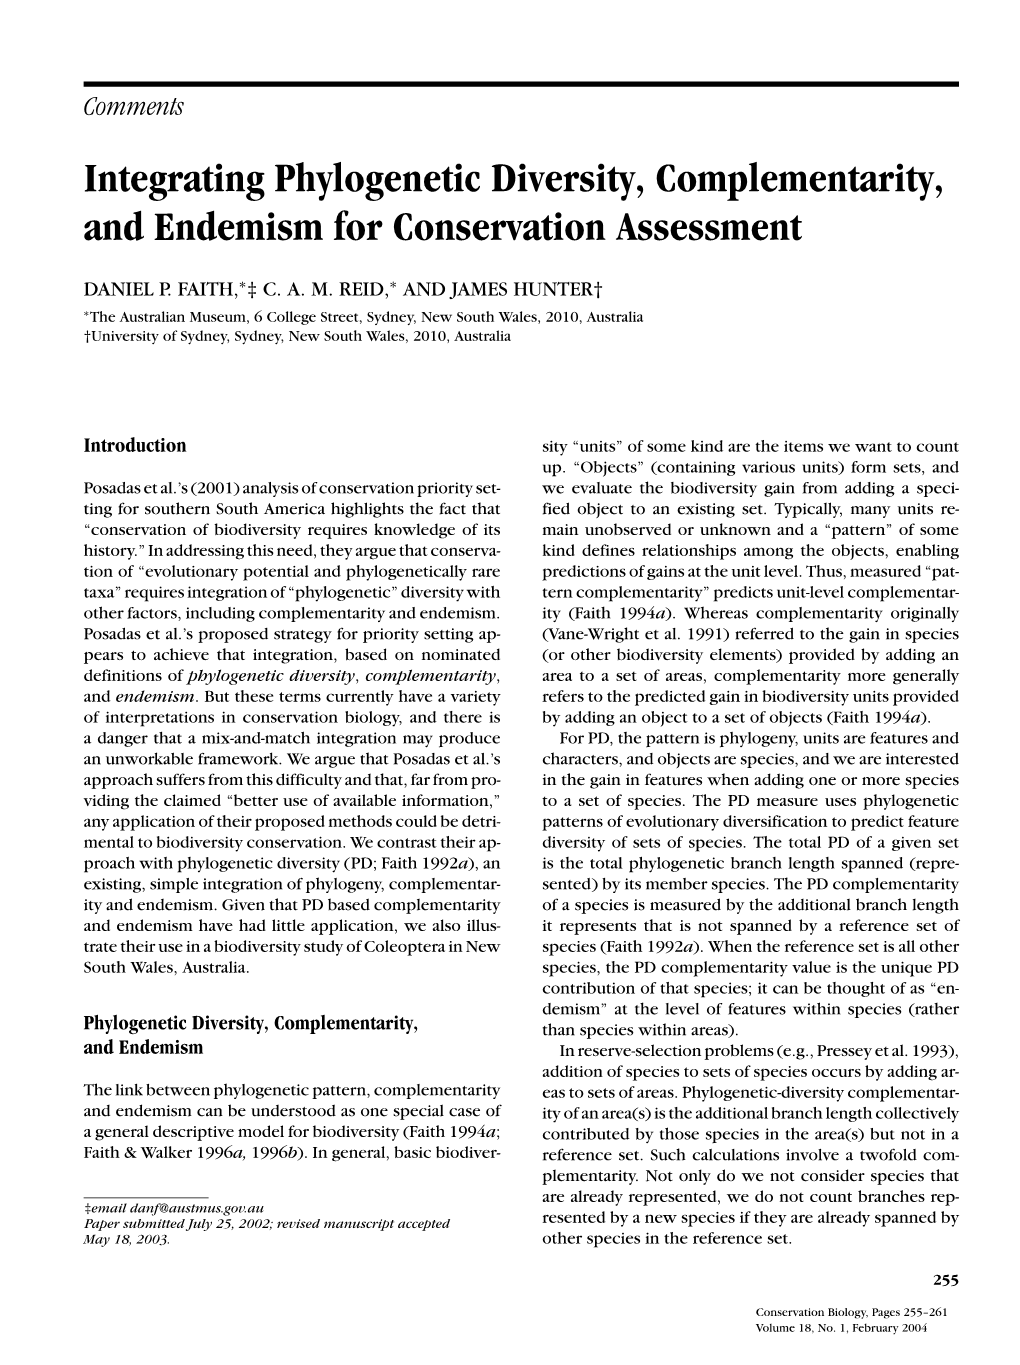 Integrating Phylogenetic Diversity, Complementarity, and Endemism for Conservation Assessment